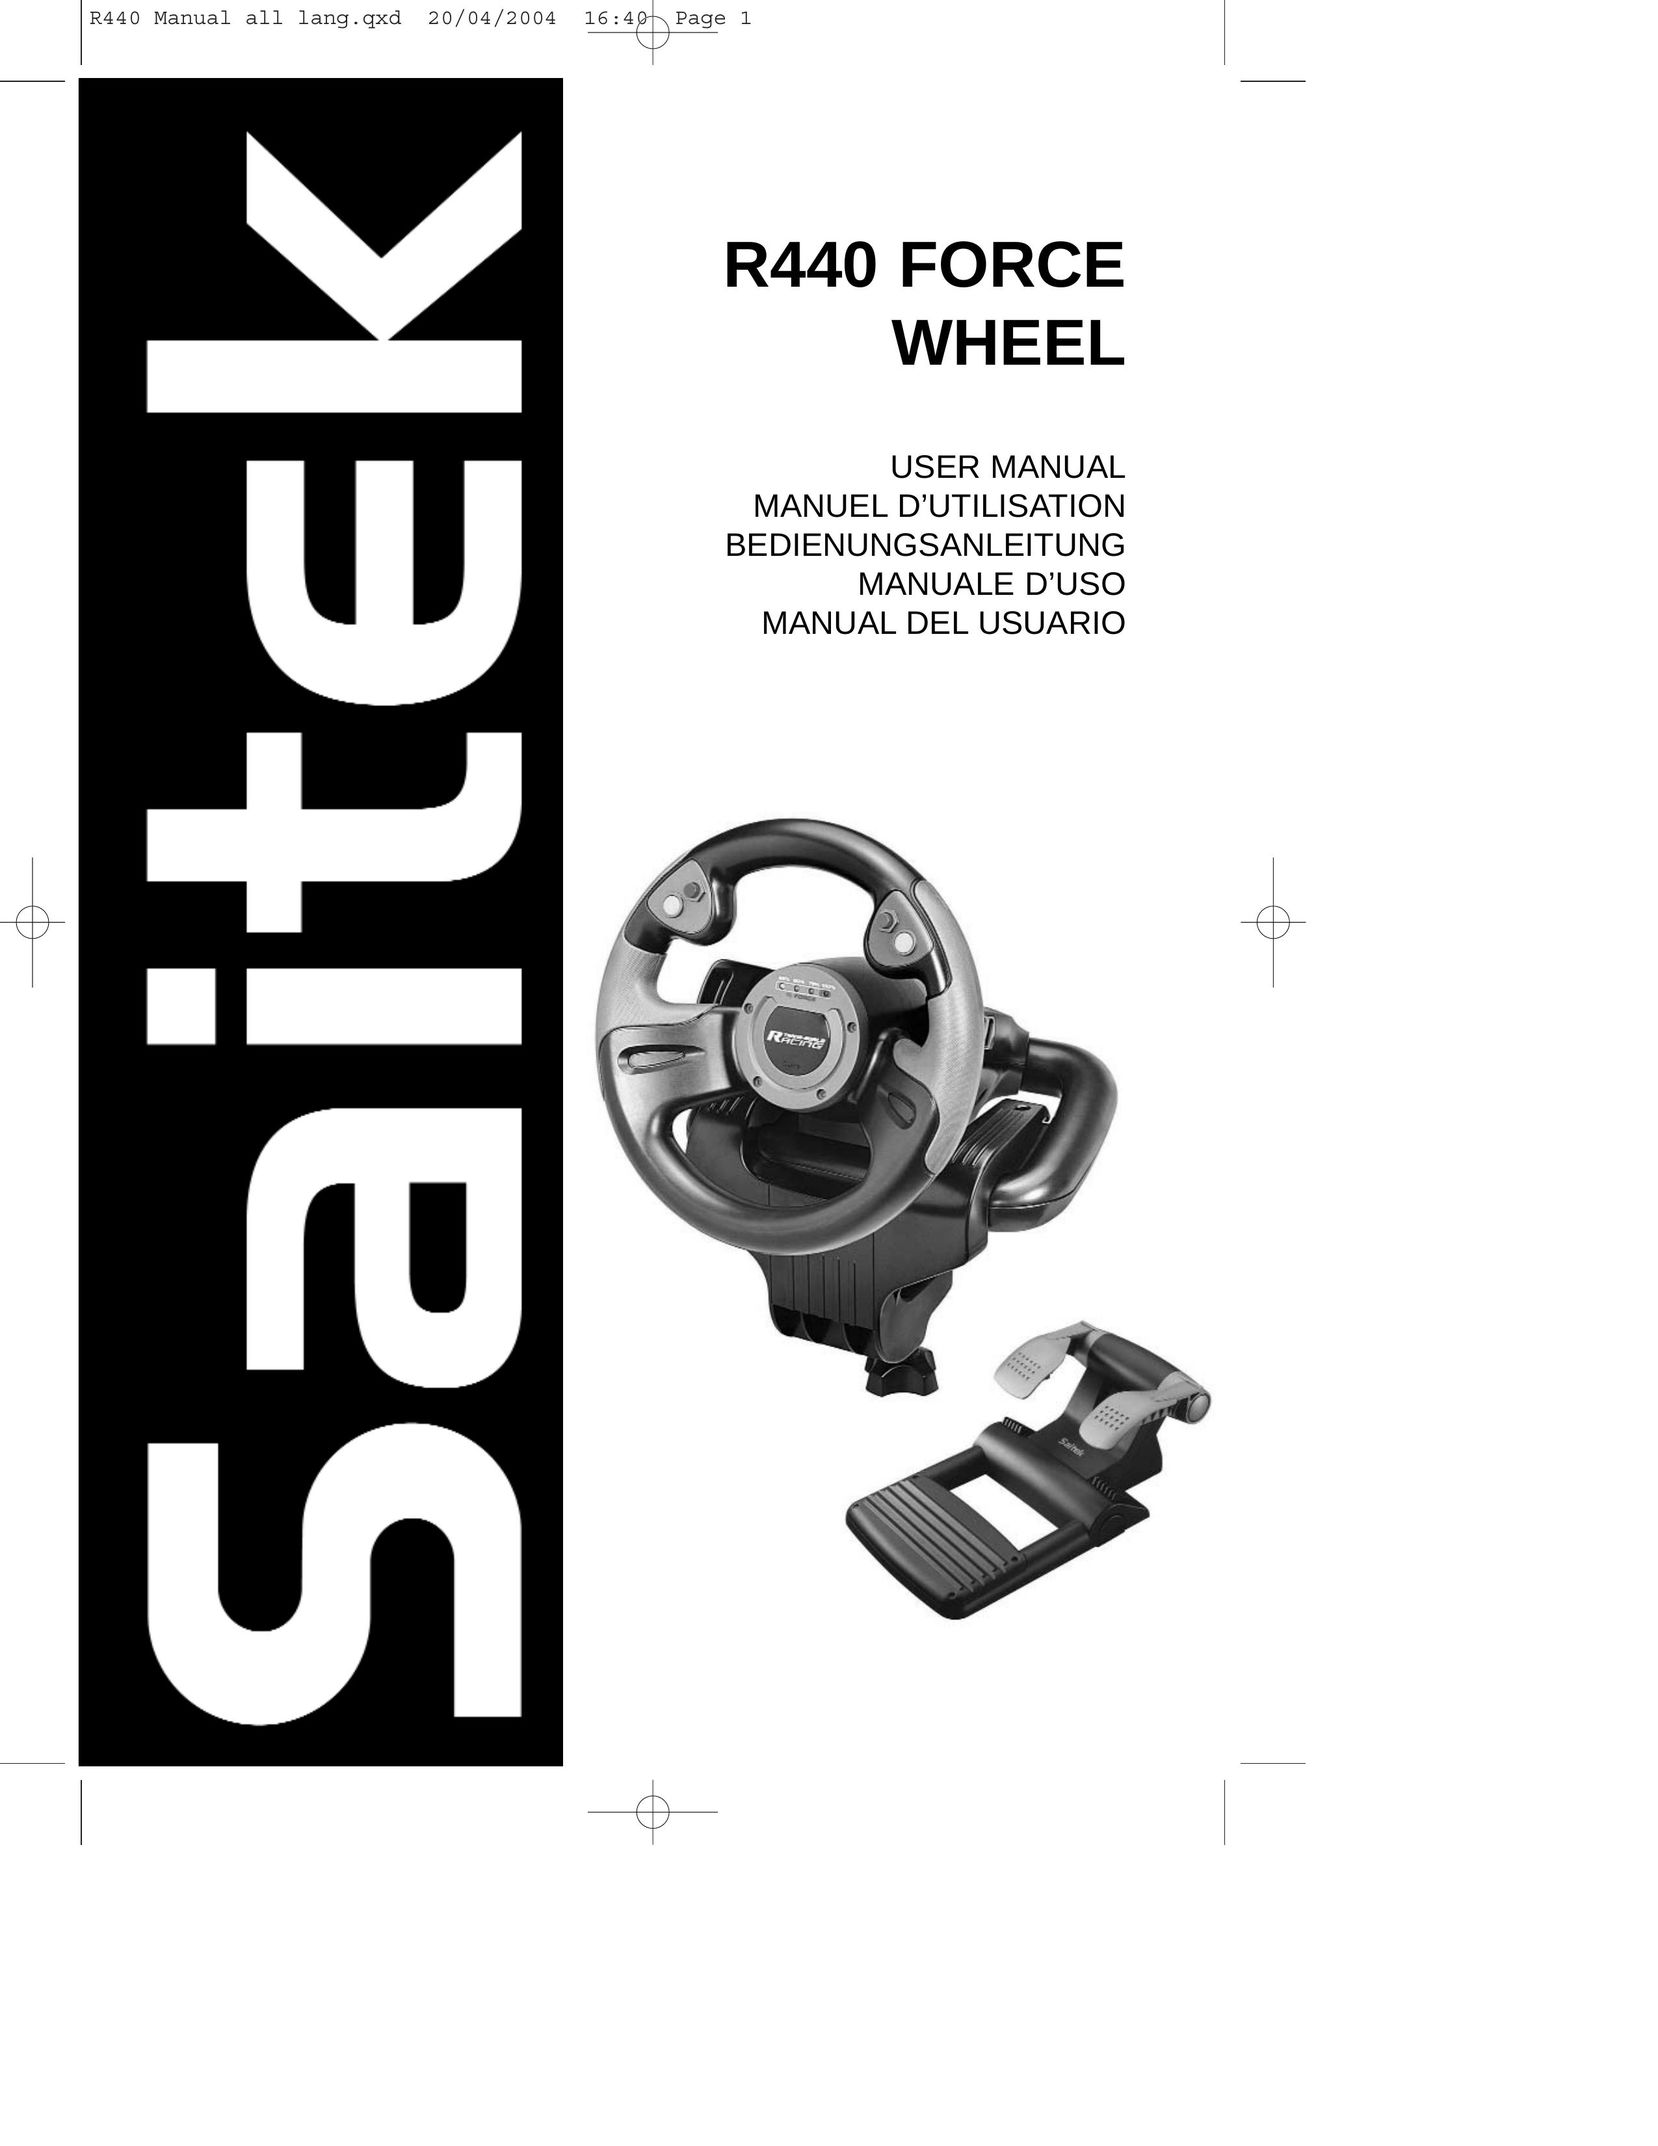 Saitek R440 Video Game Controller User Manual